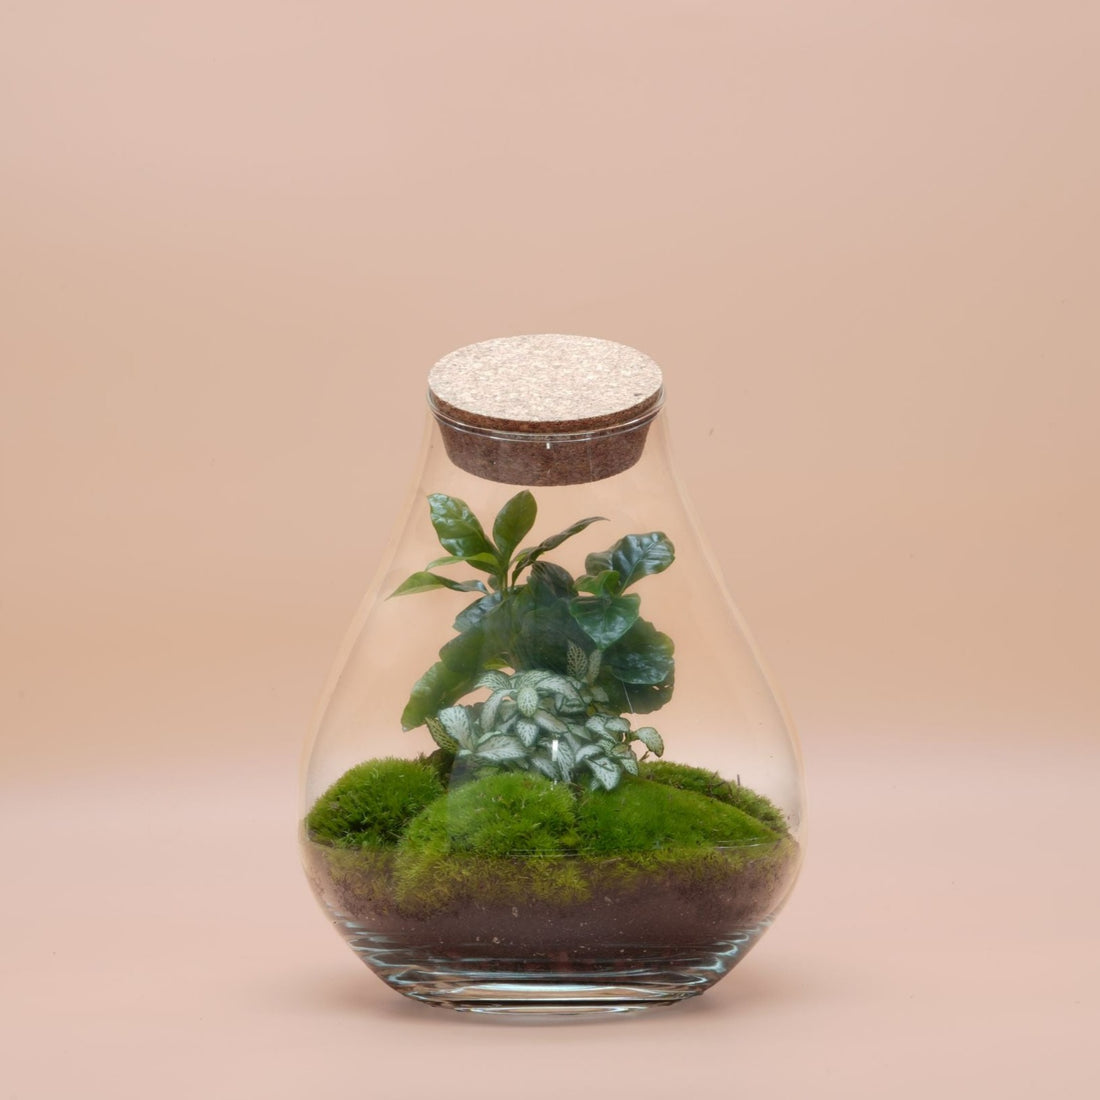 Ready-made terrarium ◦ Small Teardrop ◦ Baker Street H: 25 cm